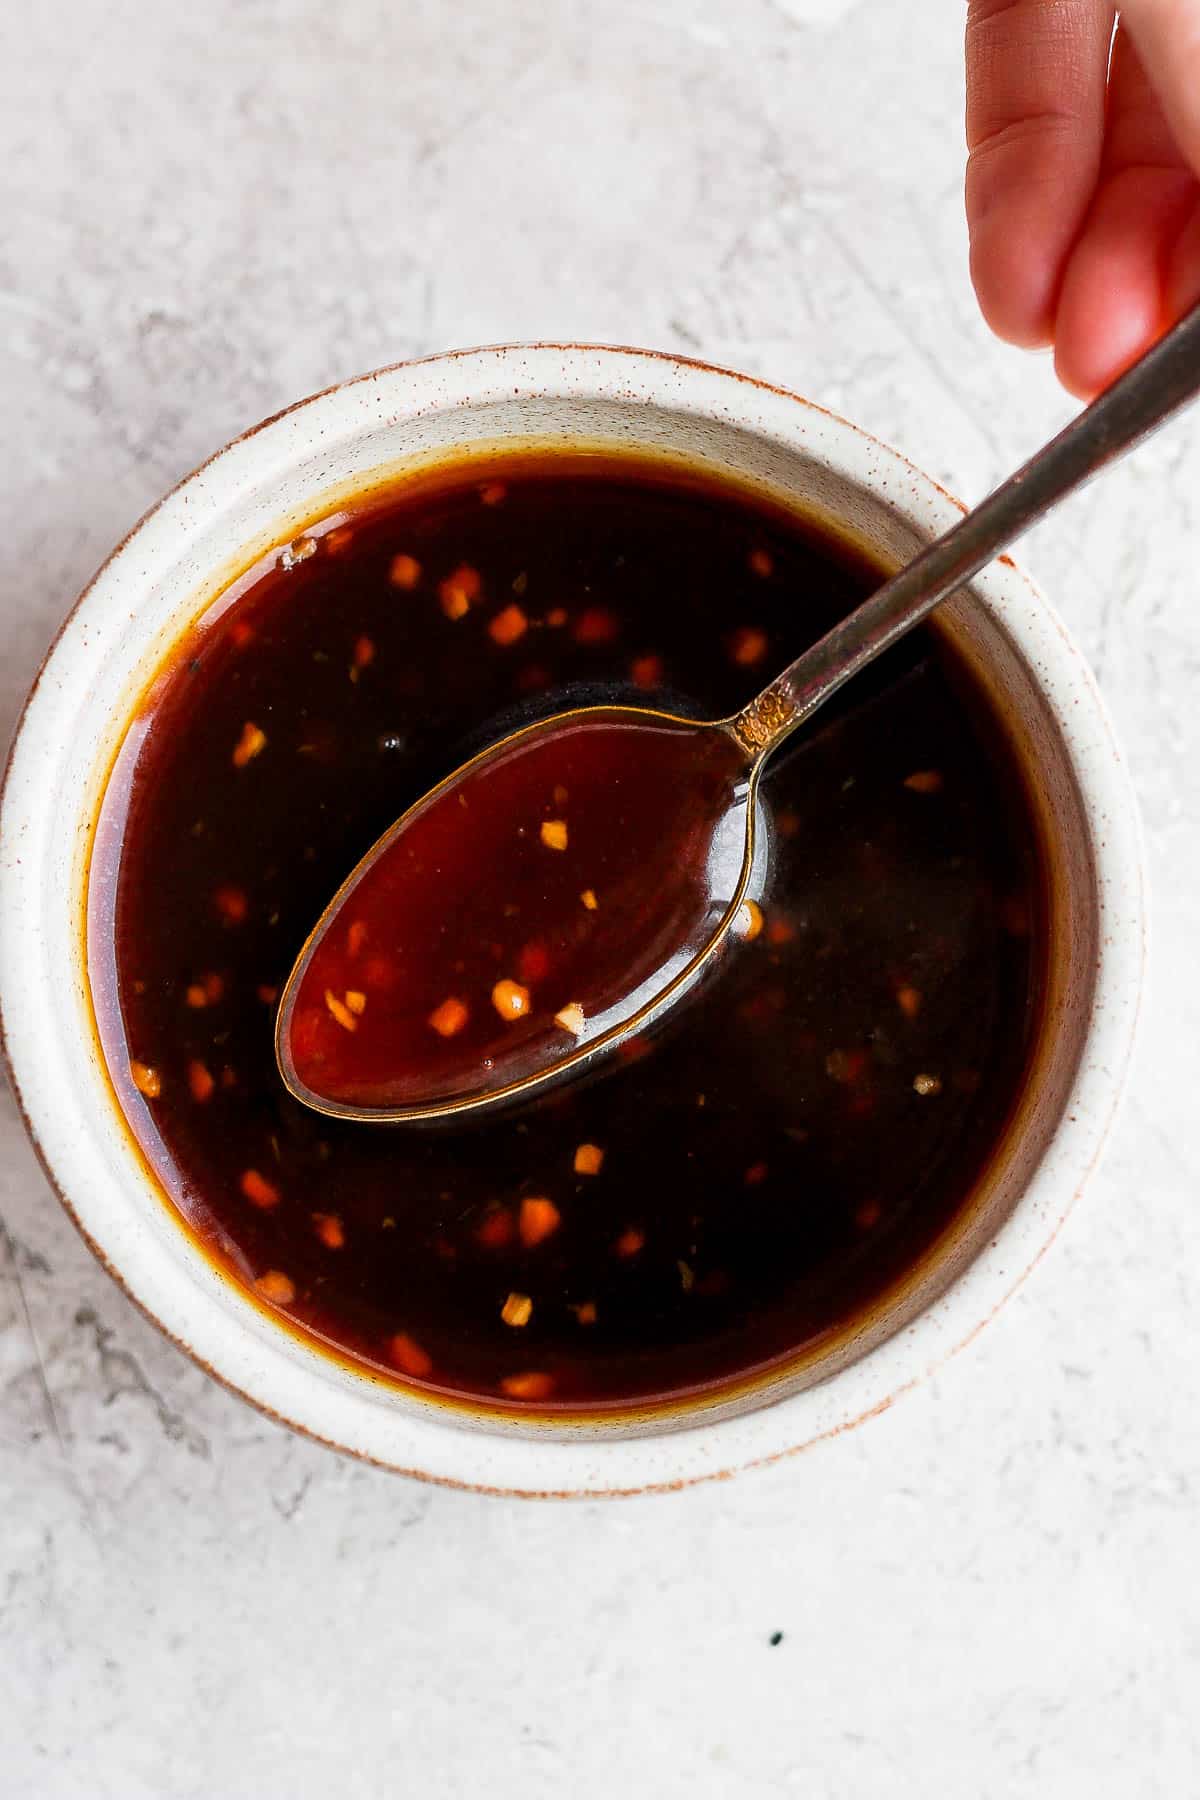 A bowl of teriyaki sauce with a spoon.